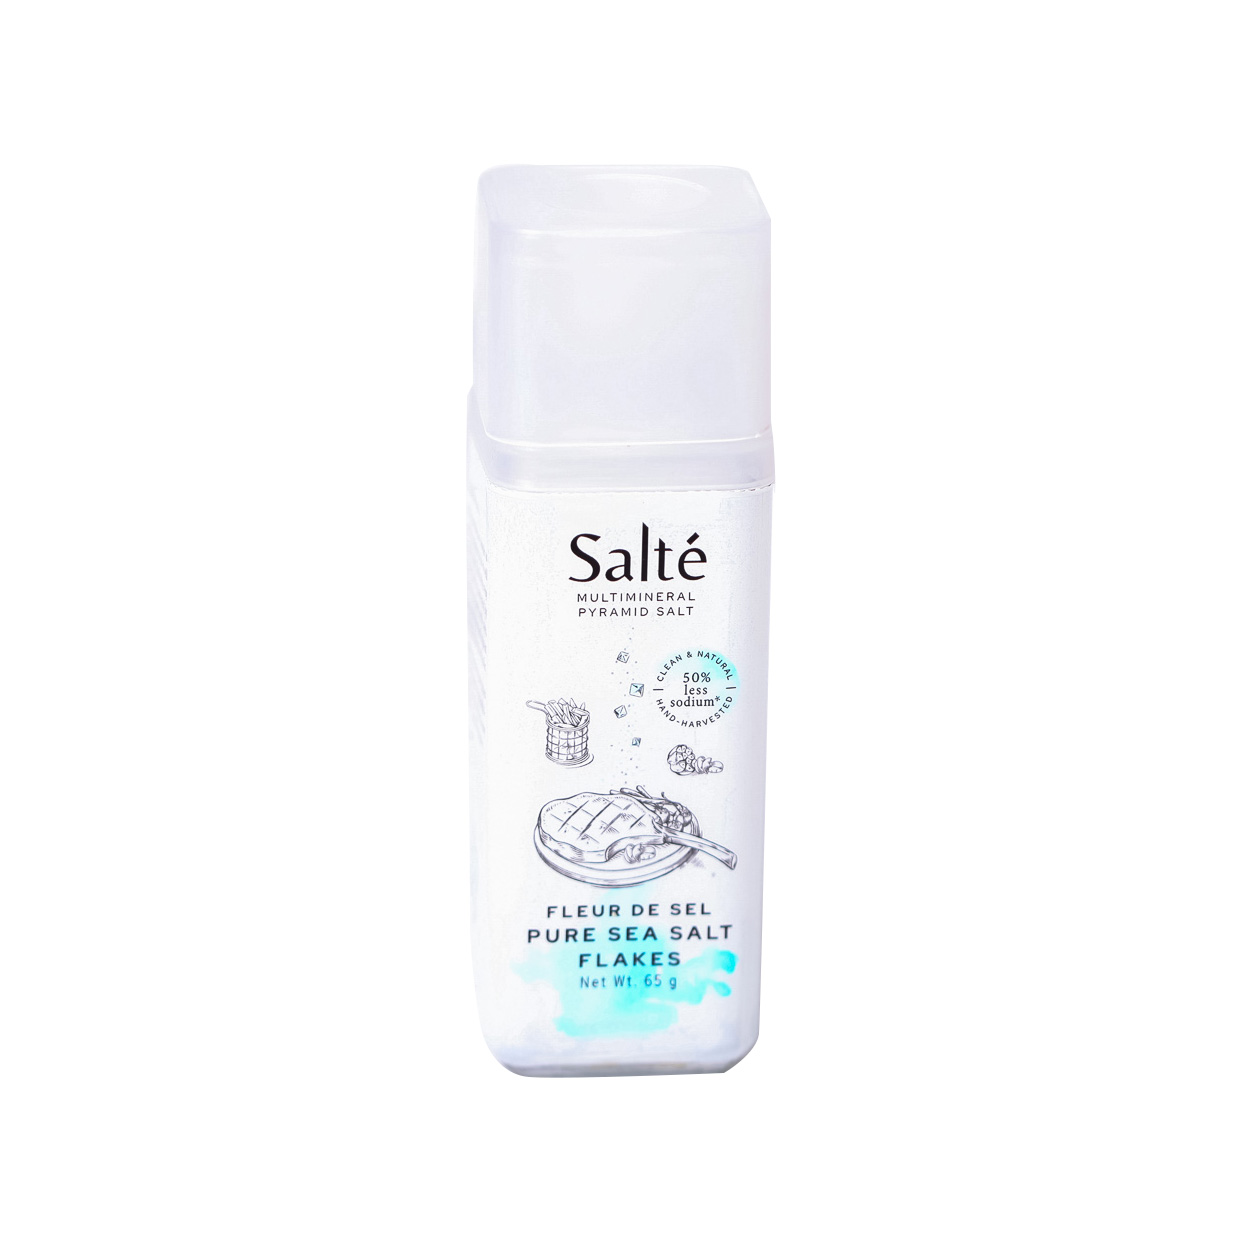 Salté Pure Sea Salt Flakes with Grinder